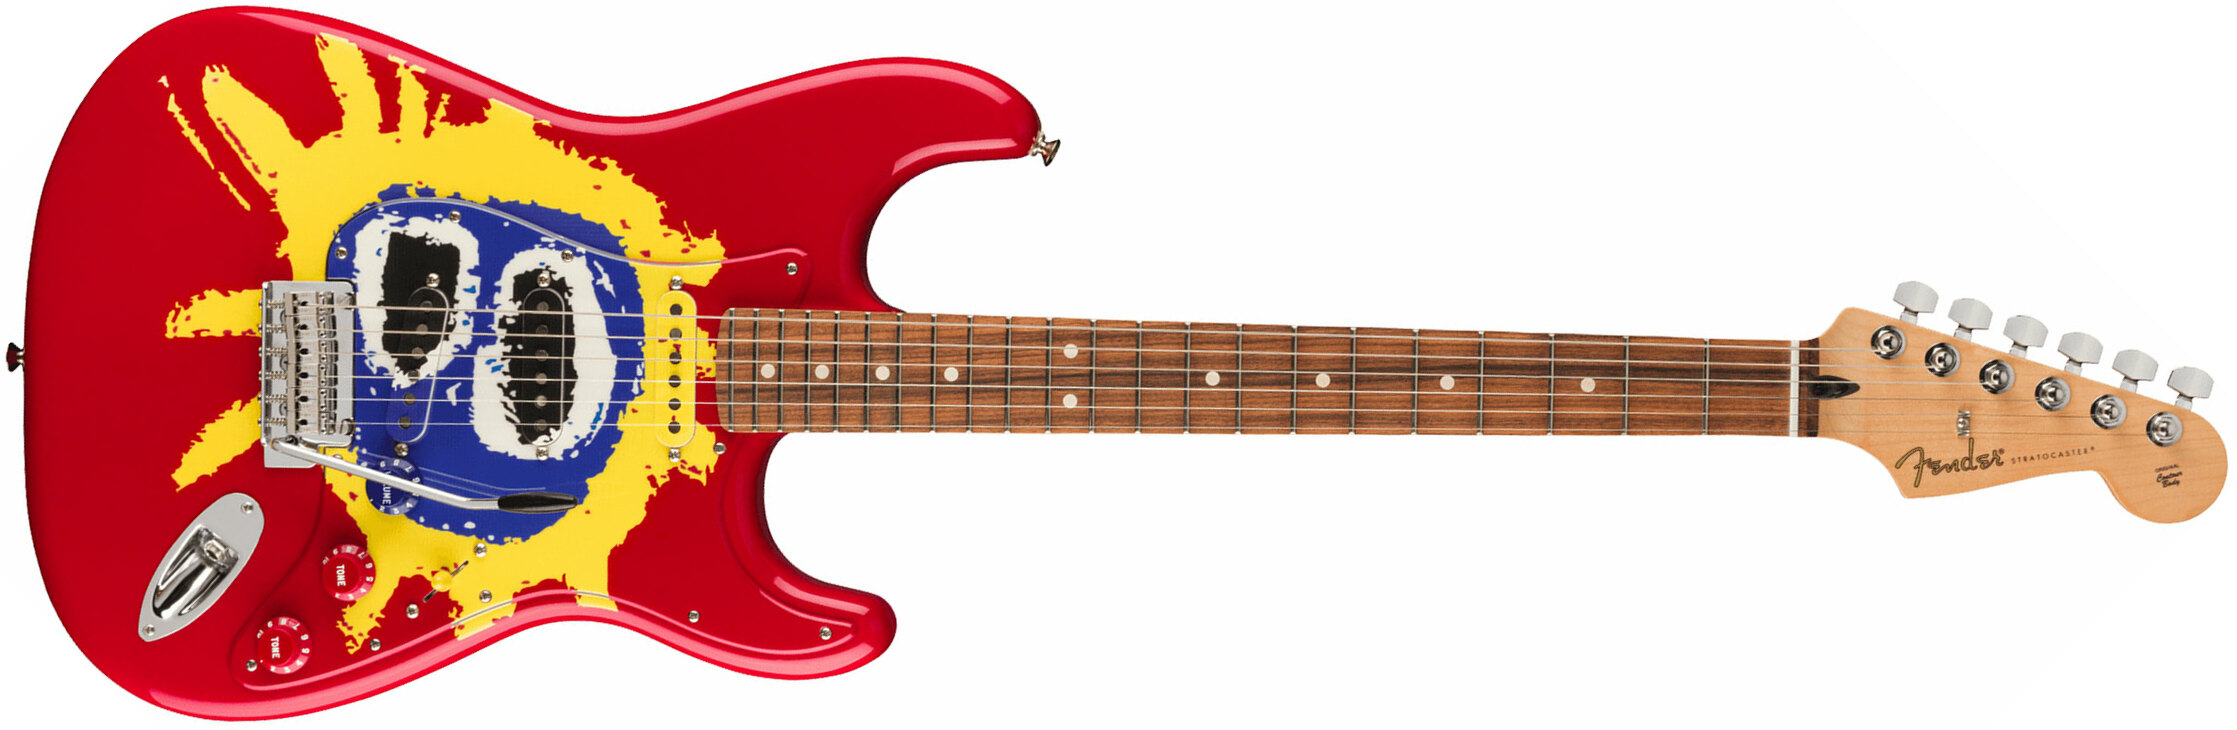 Fender Strat 30th Anniversary Screamadelica Ltd Mex 3s Trem Pf - Red Blue Yellow - Guitarra eléctrica con forma de str. - Main picture